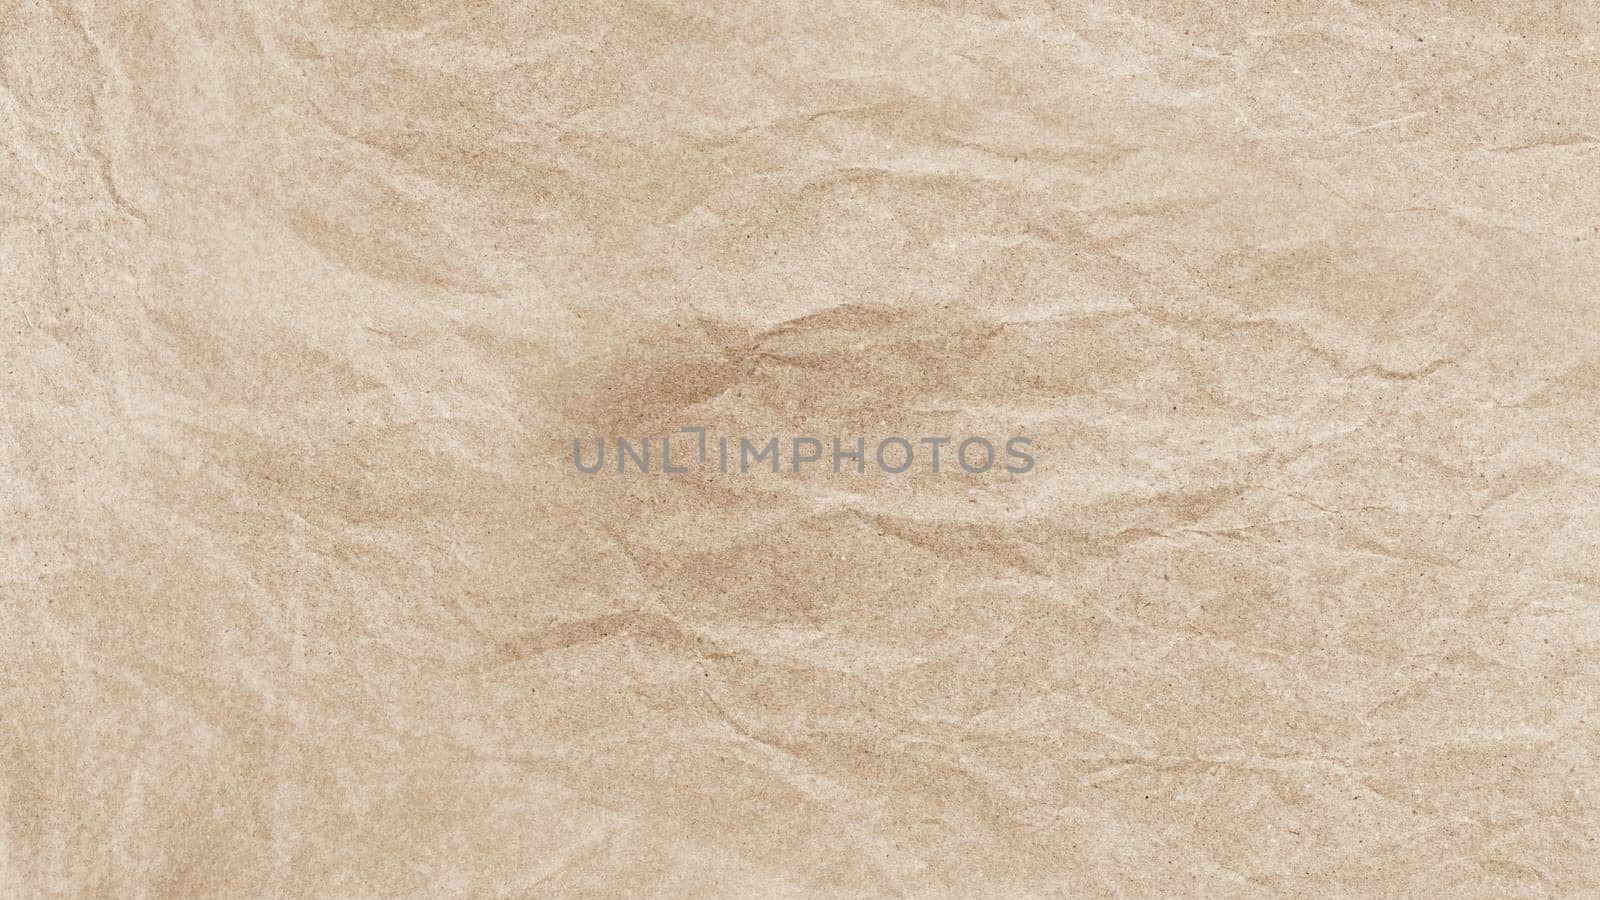 Crumpled Paper Texture Abstract Background by GiraffeStockStudio